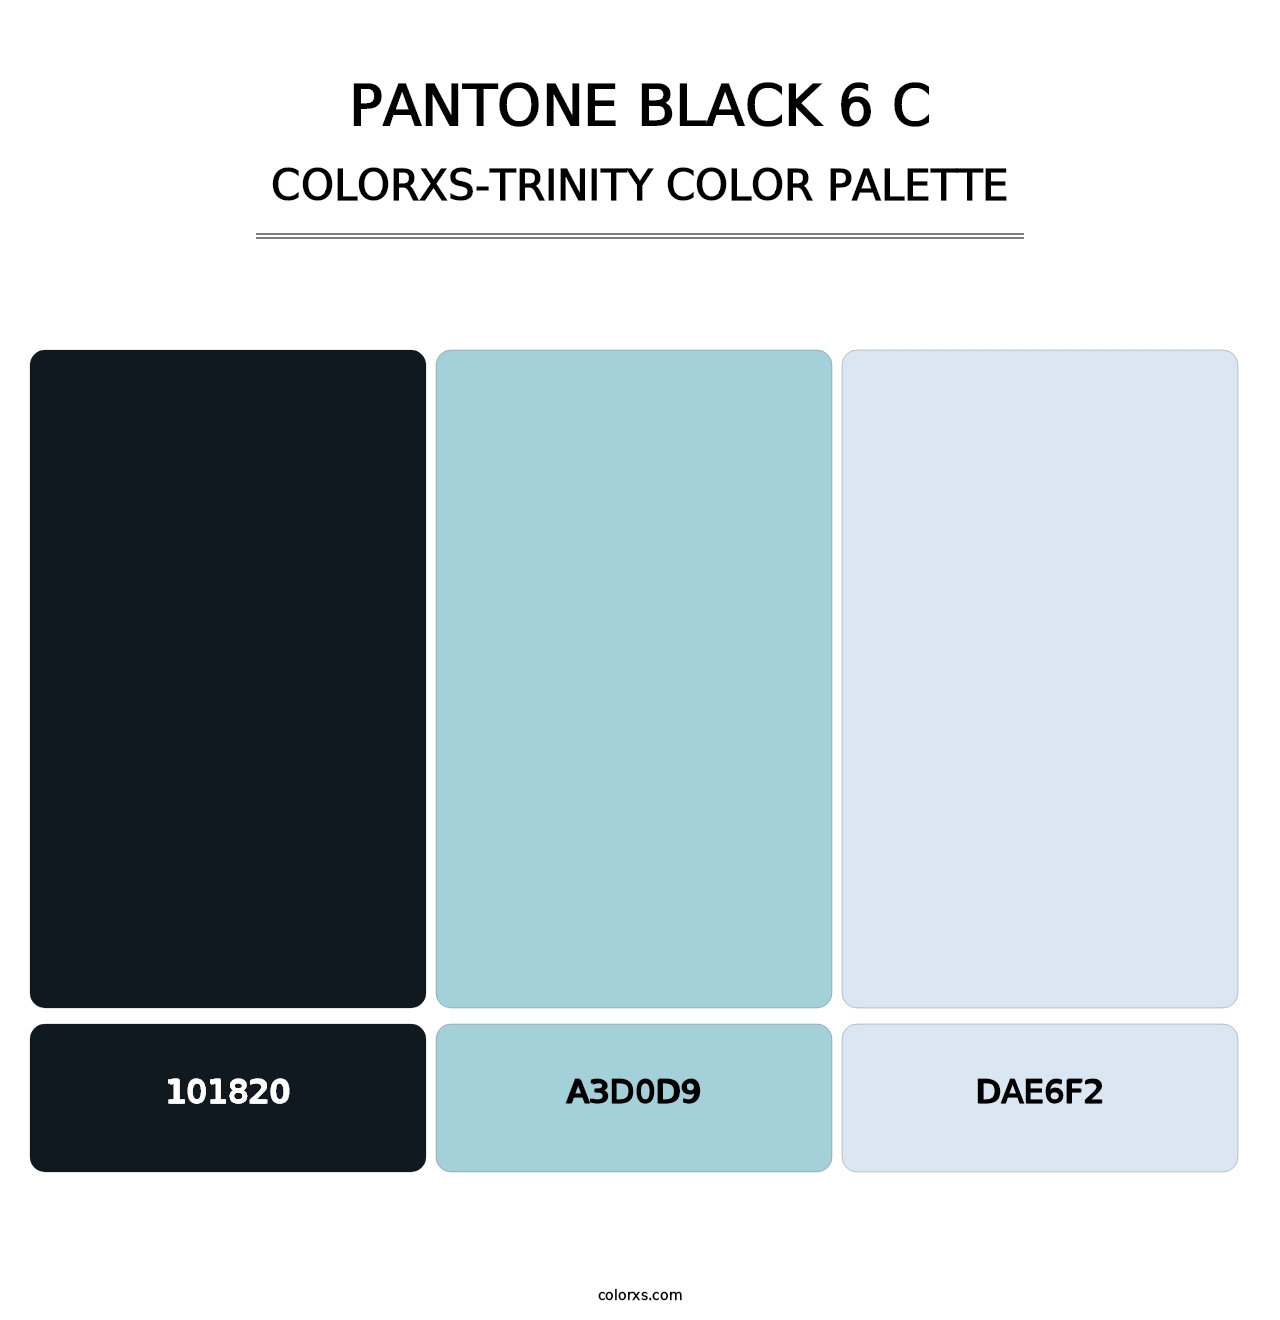 PANTONE Black 6 C - Colorxs Trinity Palette